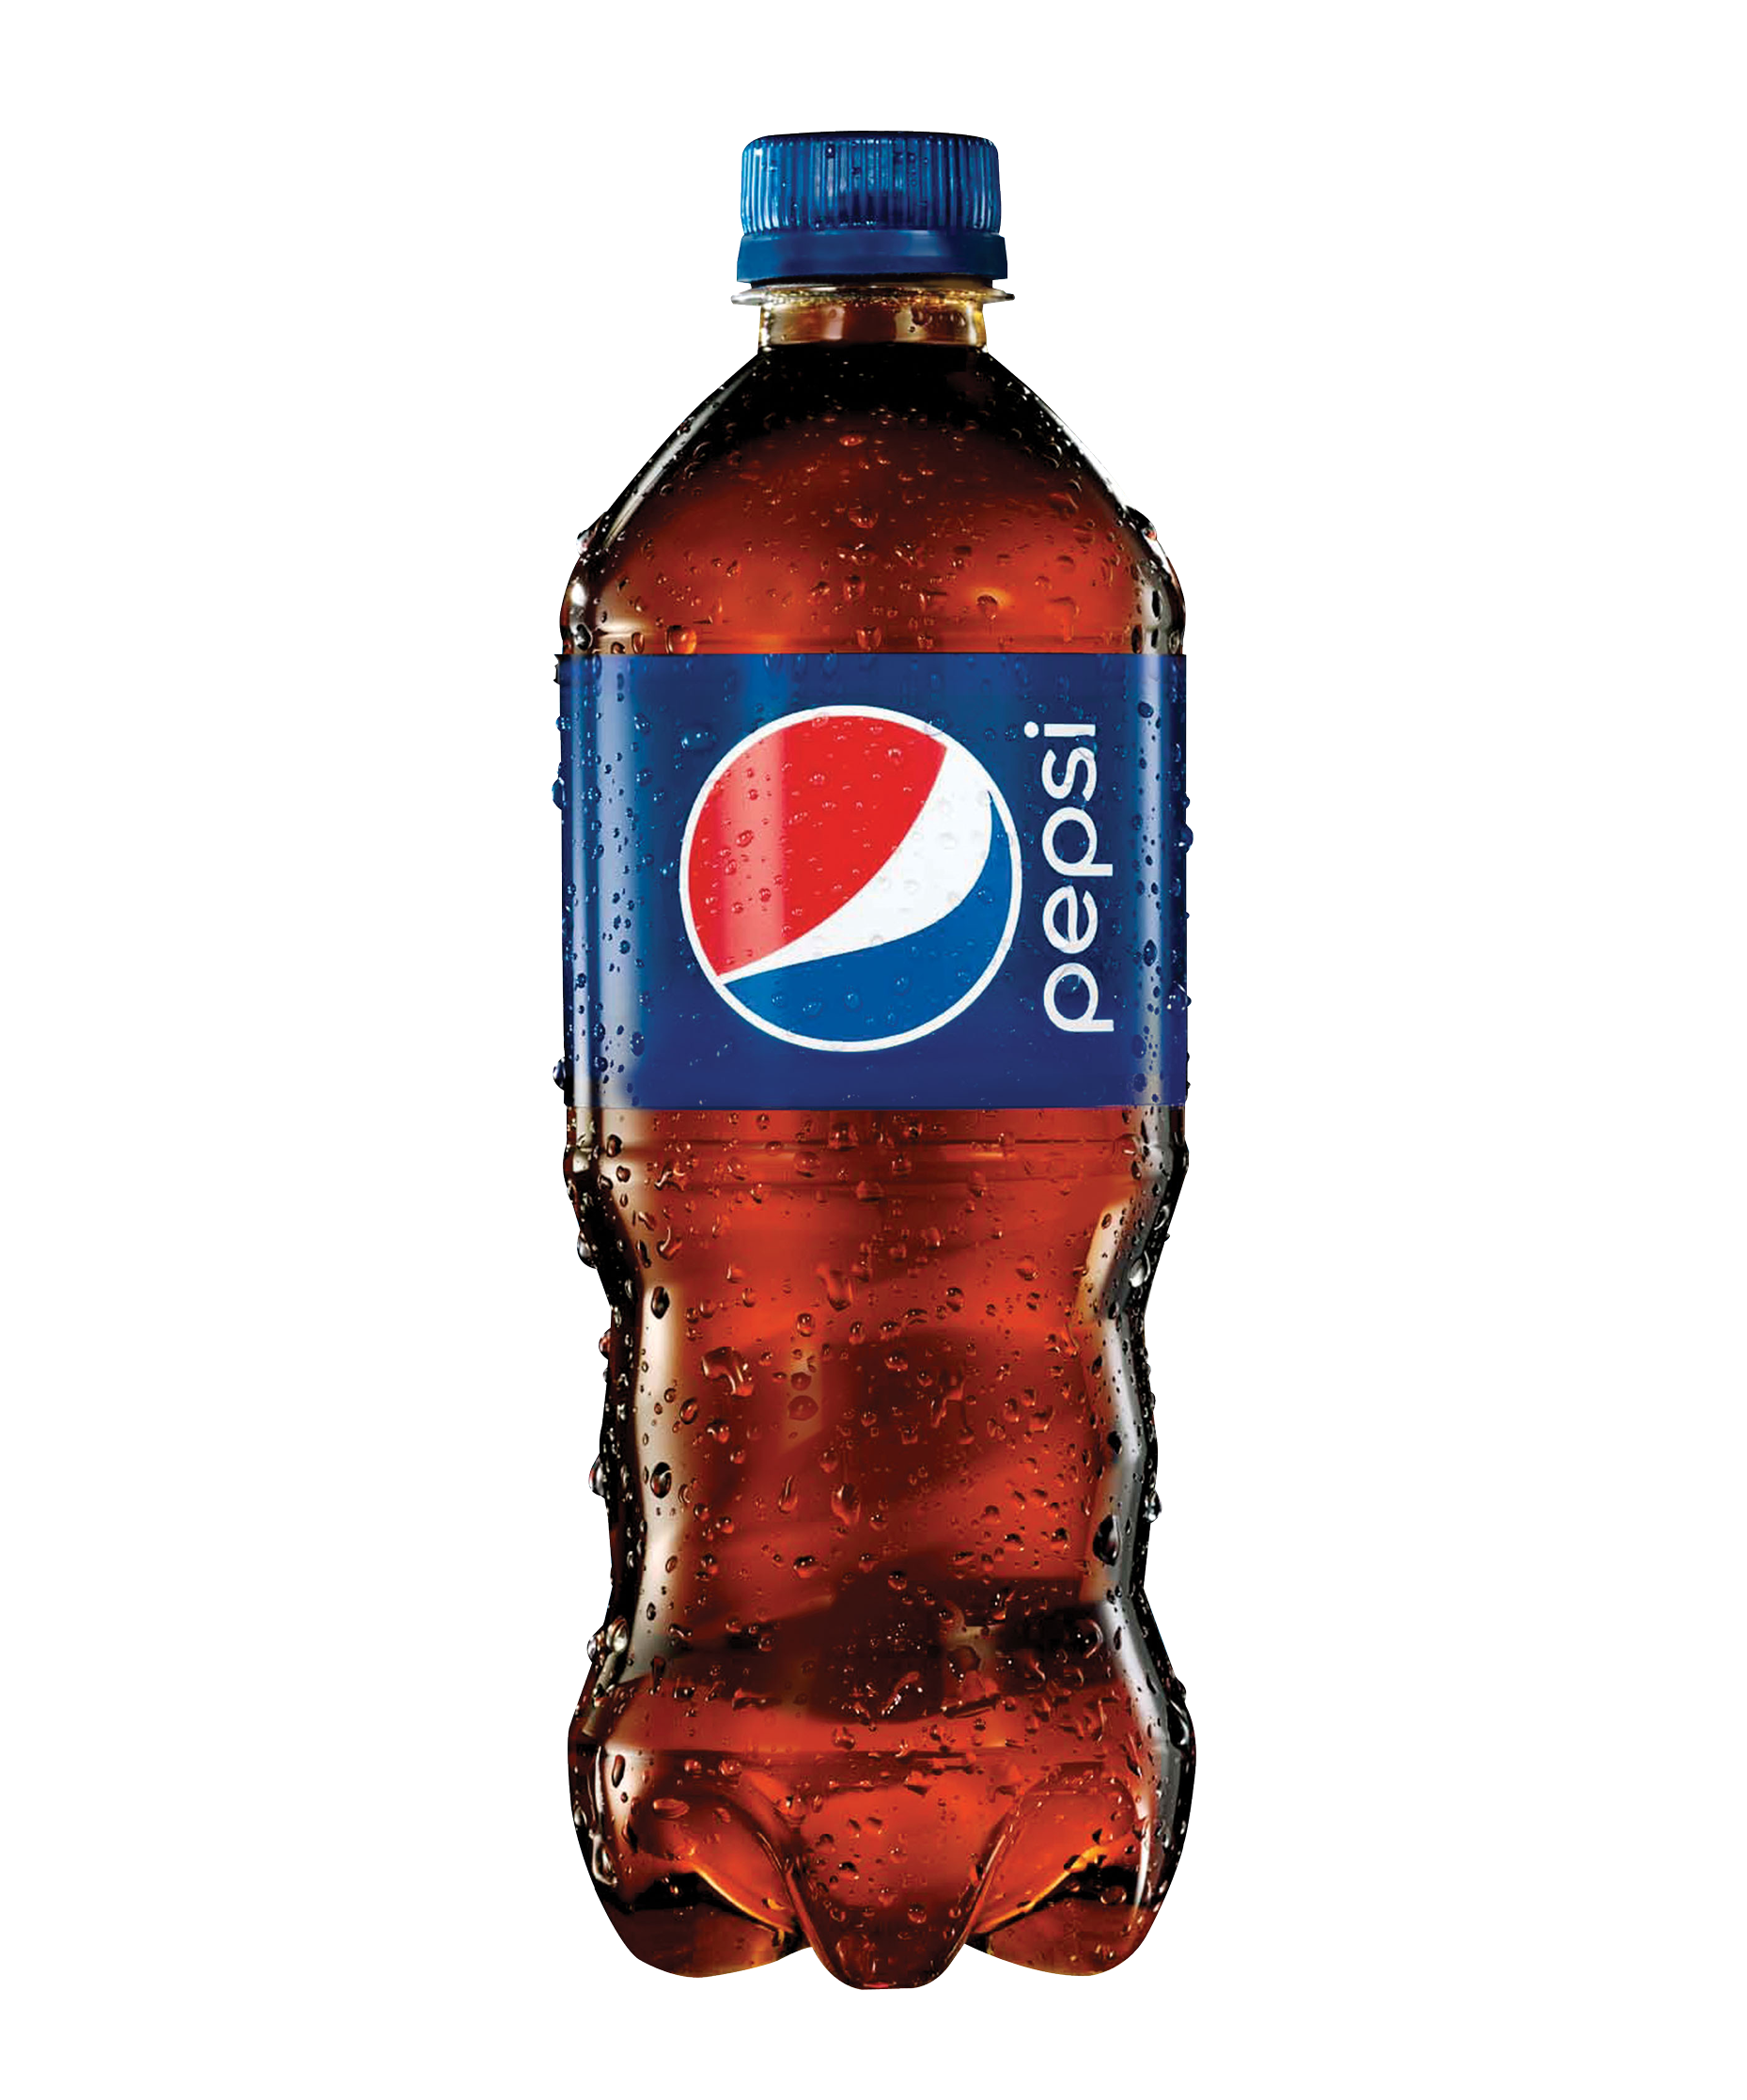 Pepsi PNG Image image #42984